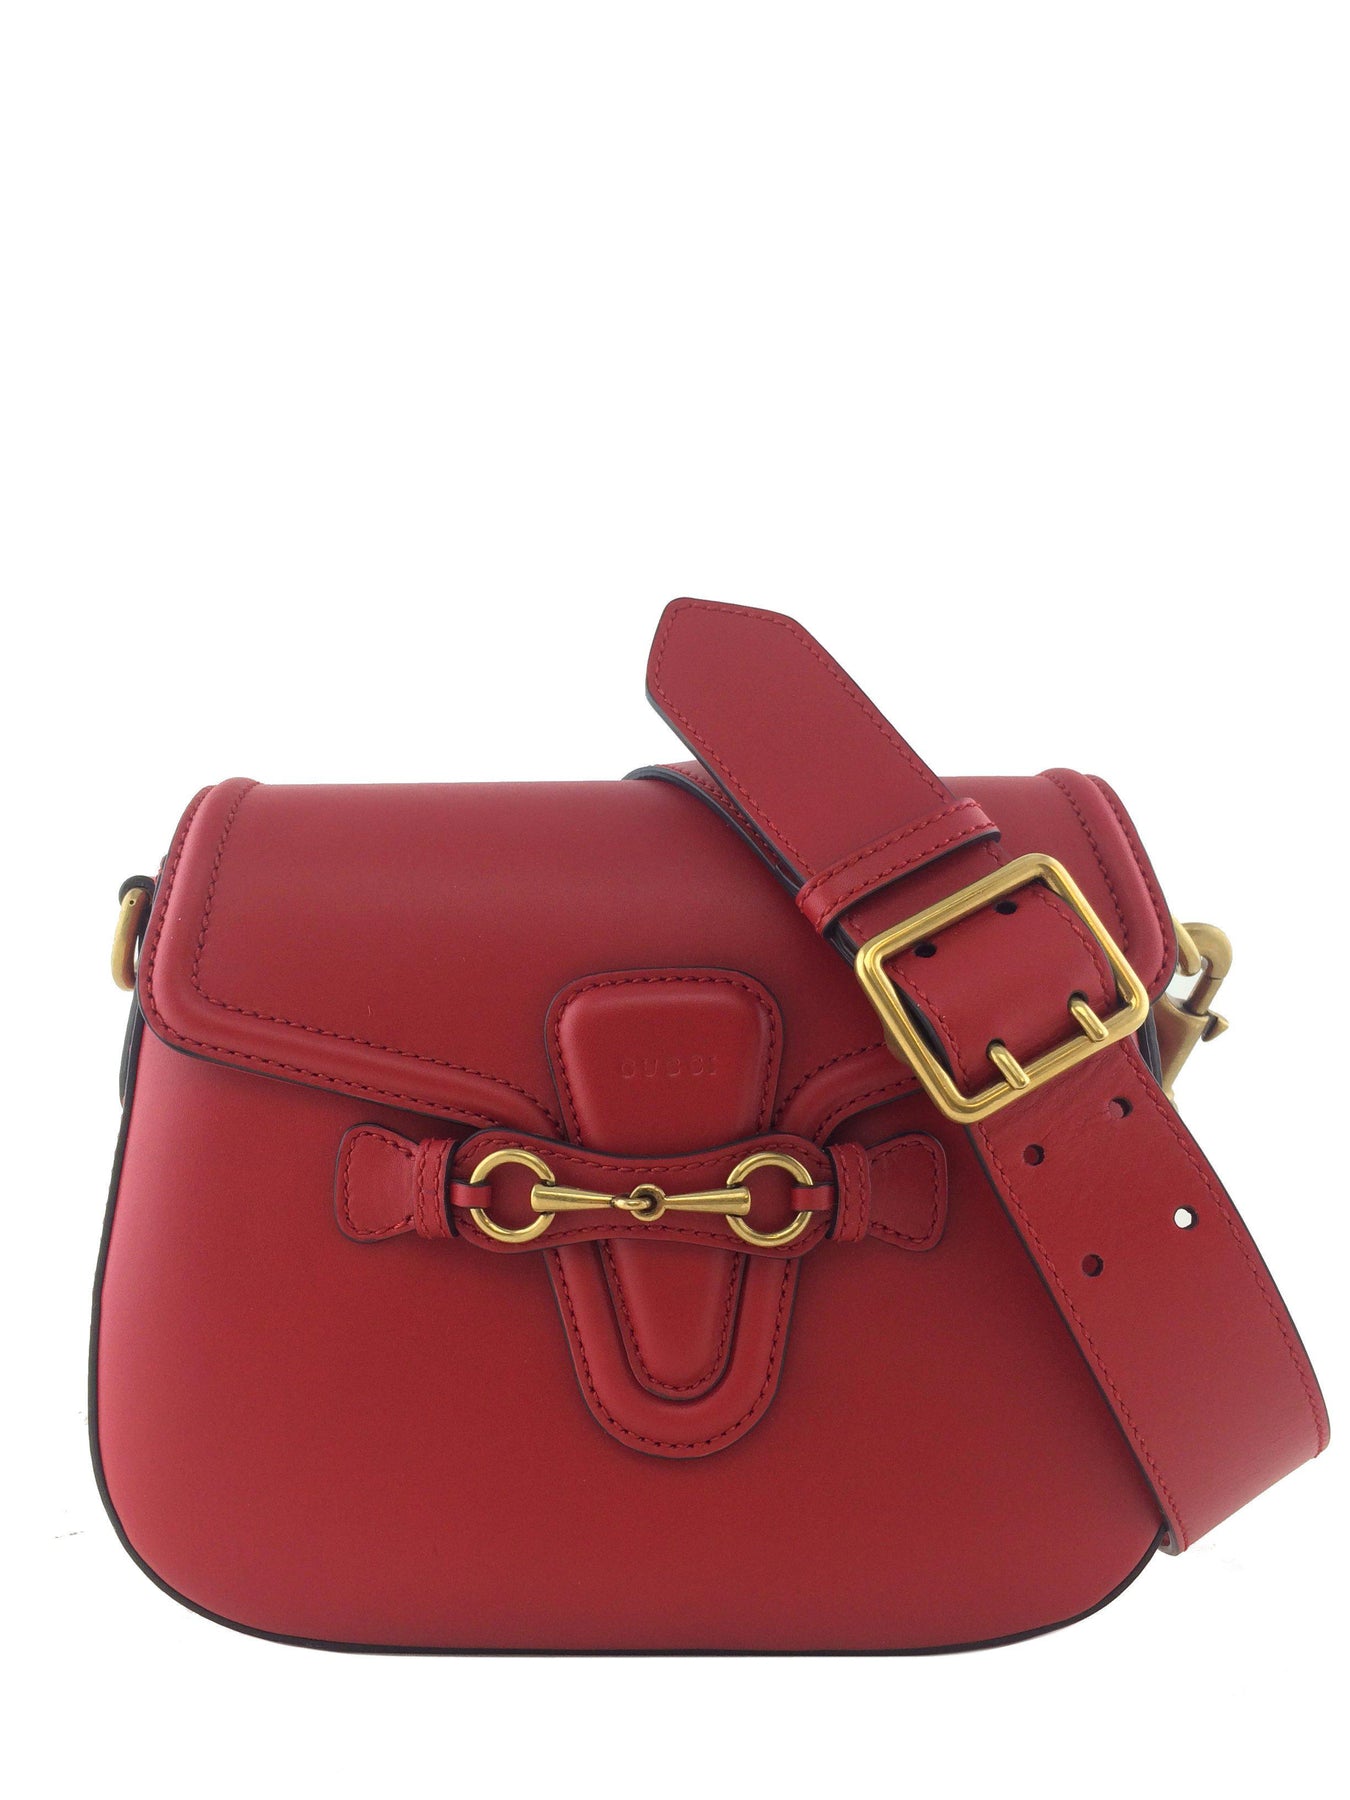 Gucci Lady Web Medium Leather Shoulder Bag - Consigned Designs